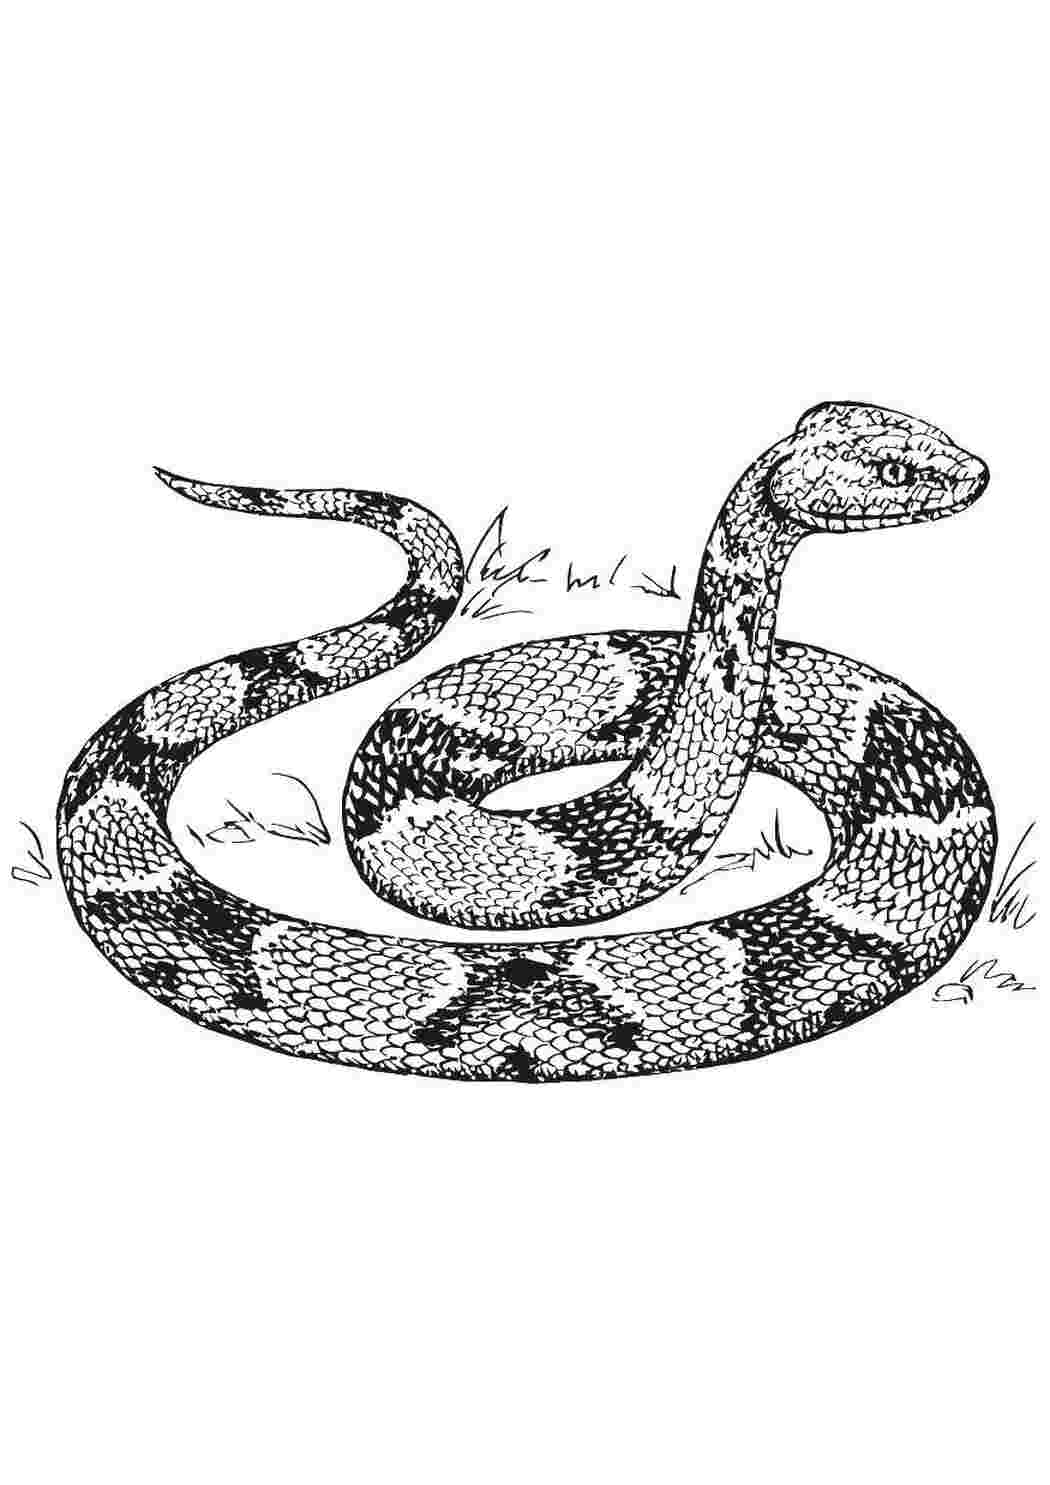 Рисунок змеи спереди